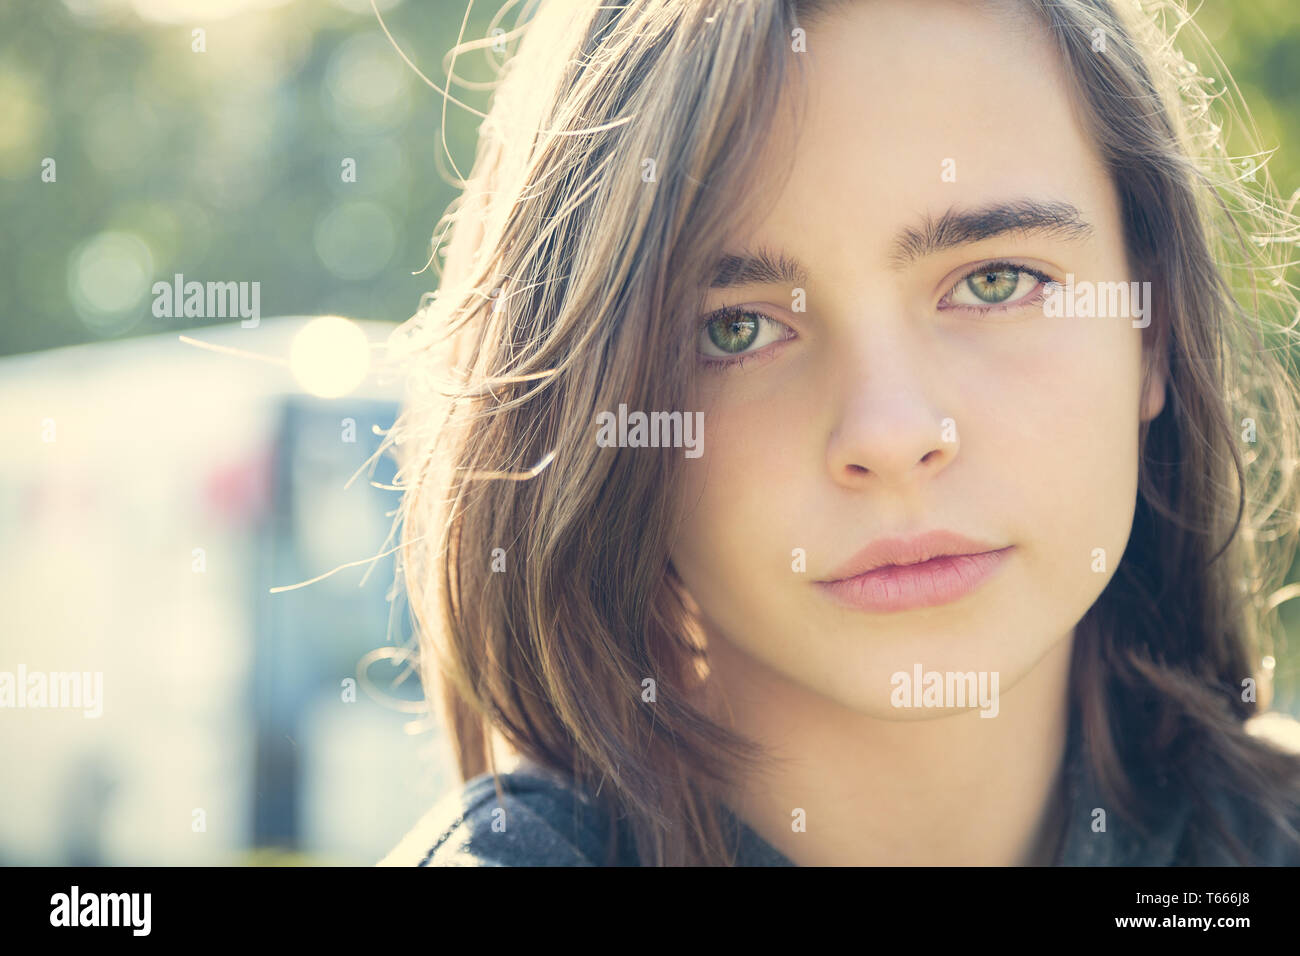 close up portrait of a sensitive female teenager Stock Photo